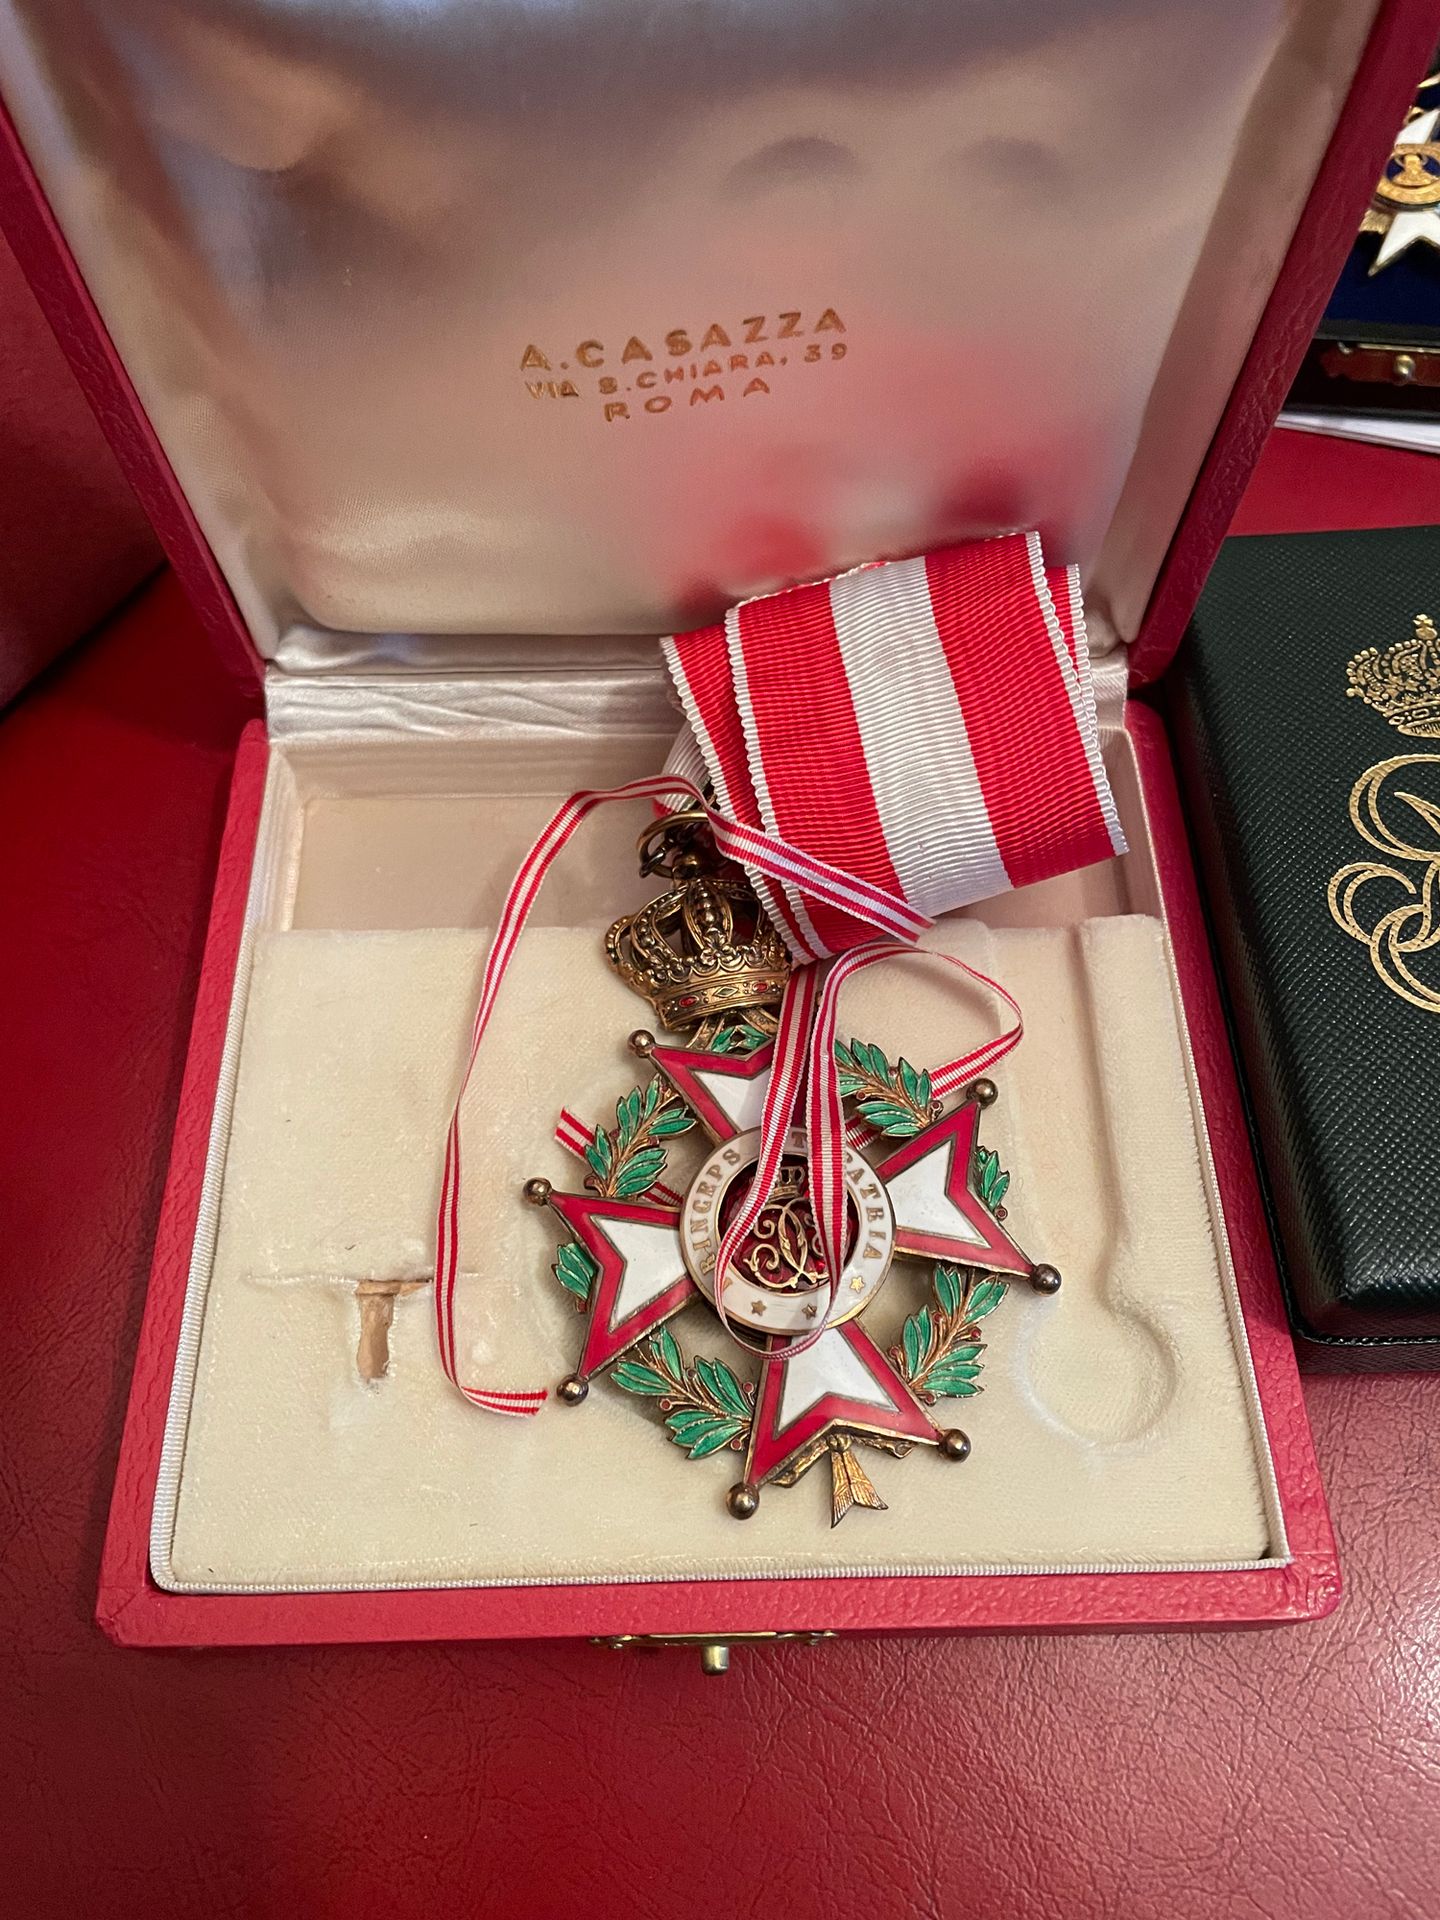 Null 圣查尔斯王子勋章。
被称为 "圣查尔斯骑士团指挥官领带"。
在它的箱子里